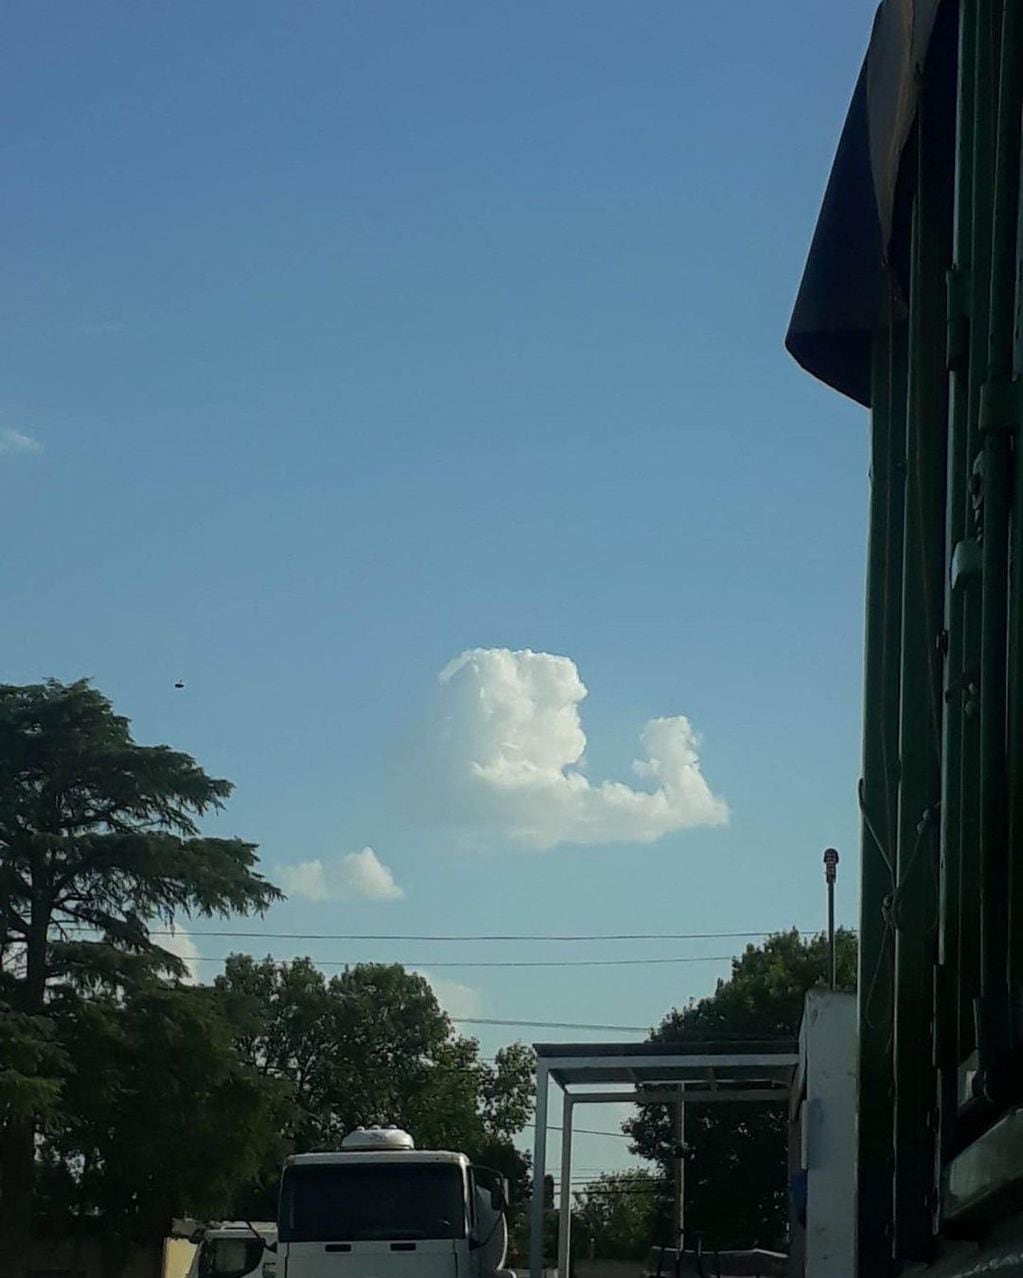 La nube con la forma de La Mona Jiménez fue fotografiada este martes en Córdoba.